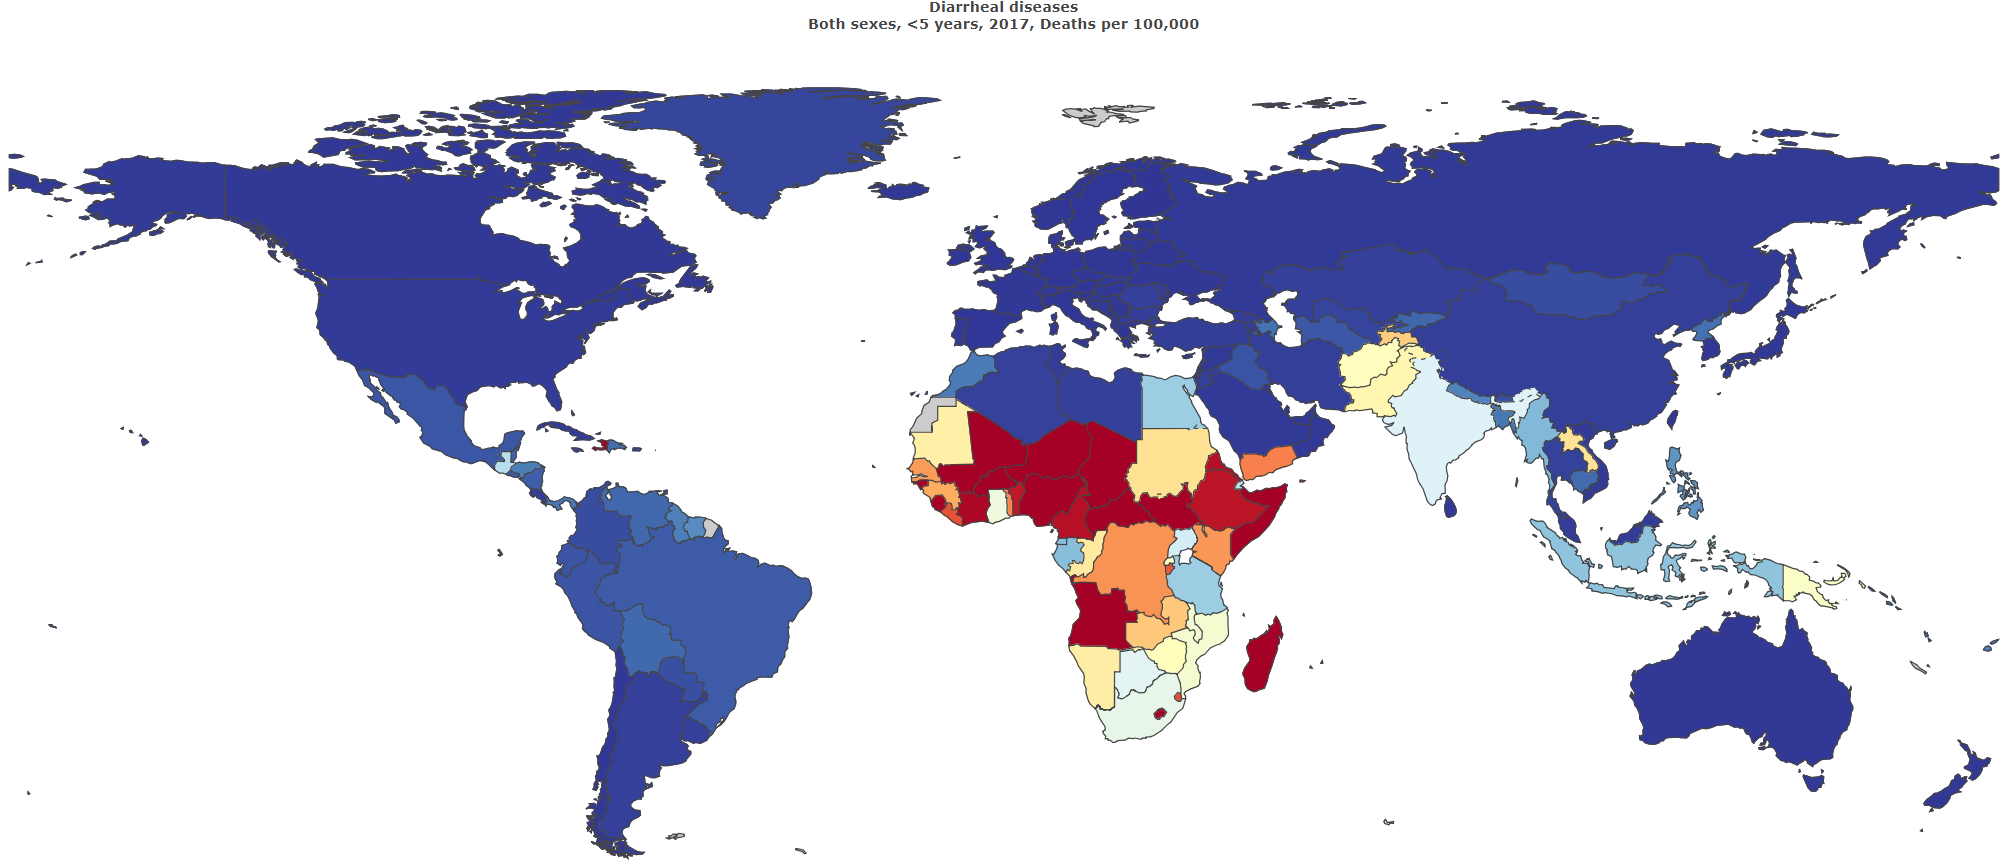 map of global diarrhea mortality rates, 2017